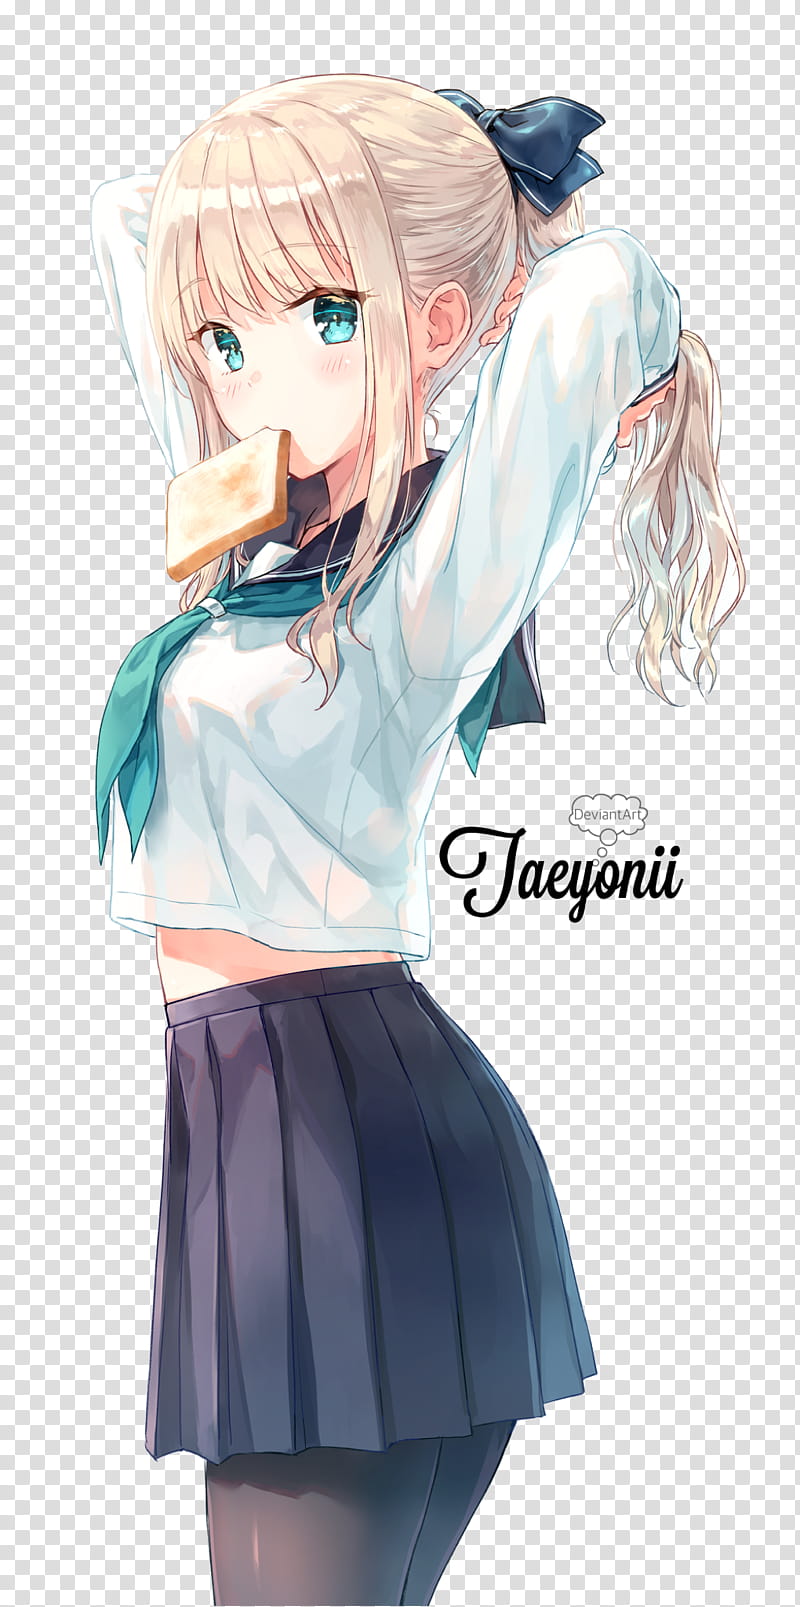 Anime School Girl, Jaeyonii anime character transparent.